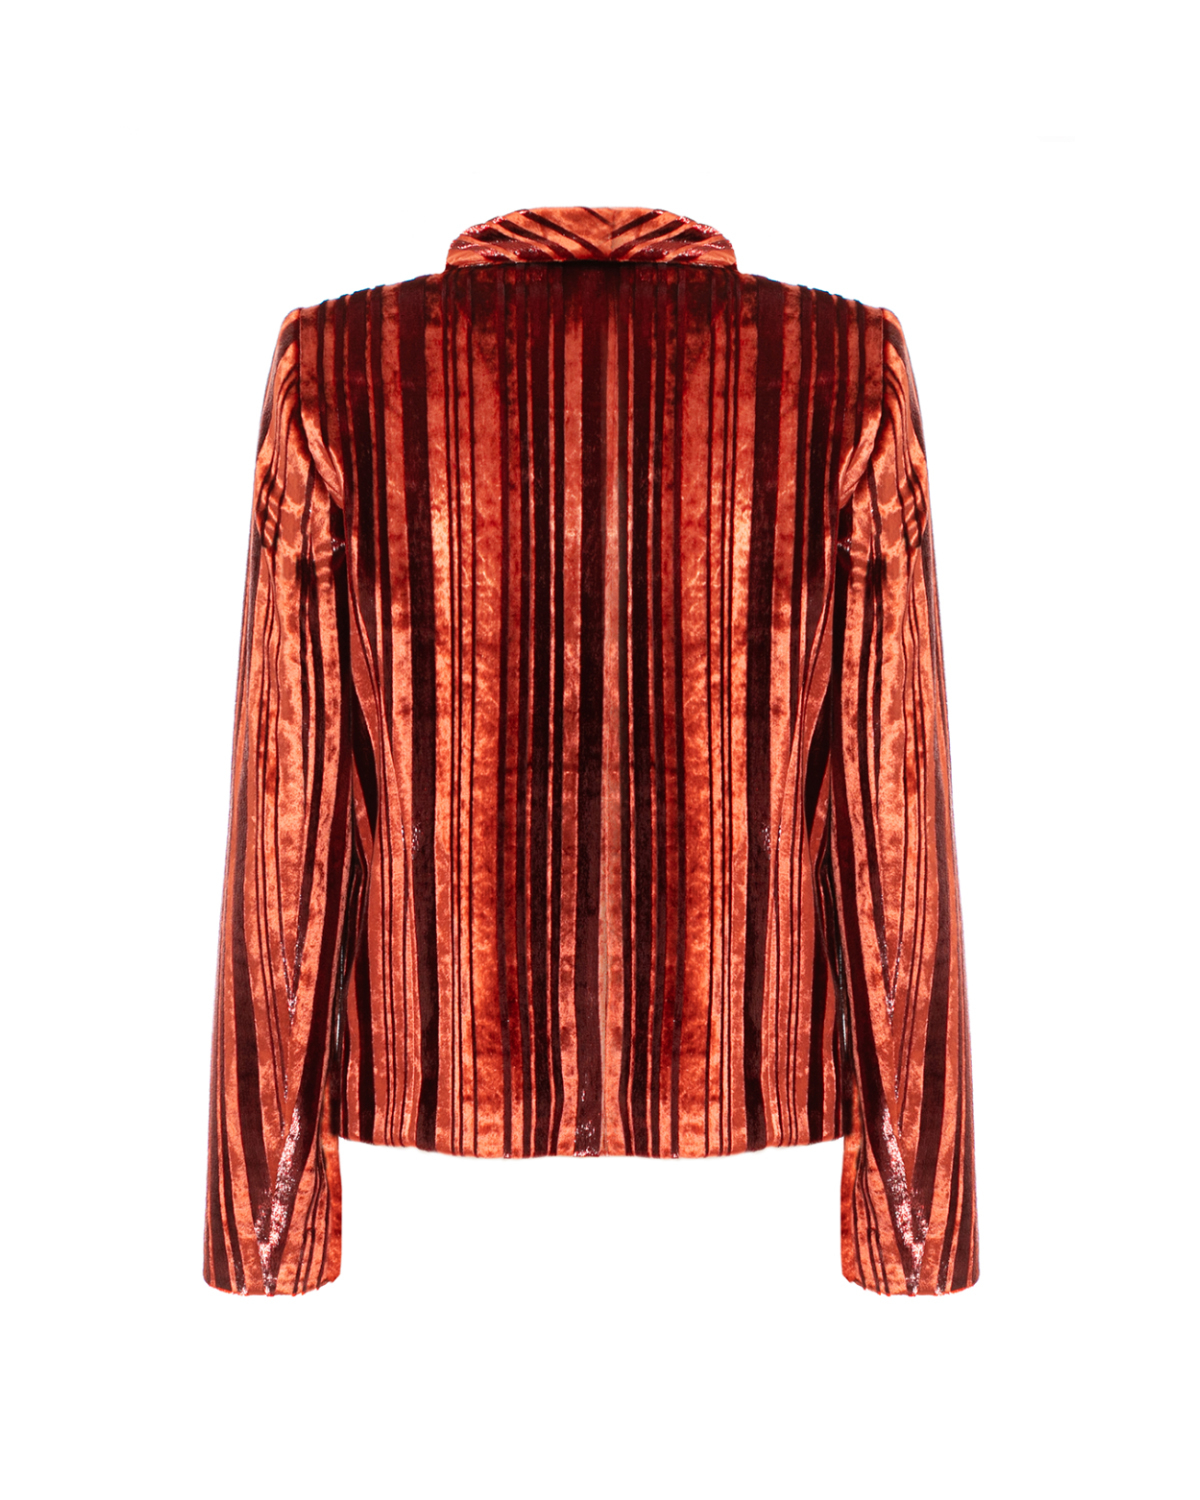 Bronze velvet jacket | Sale, -50%, Private sale | Genny